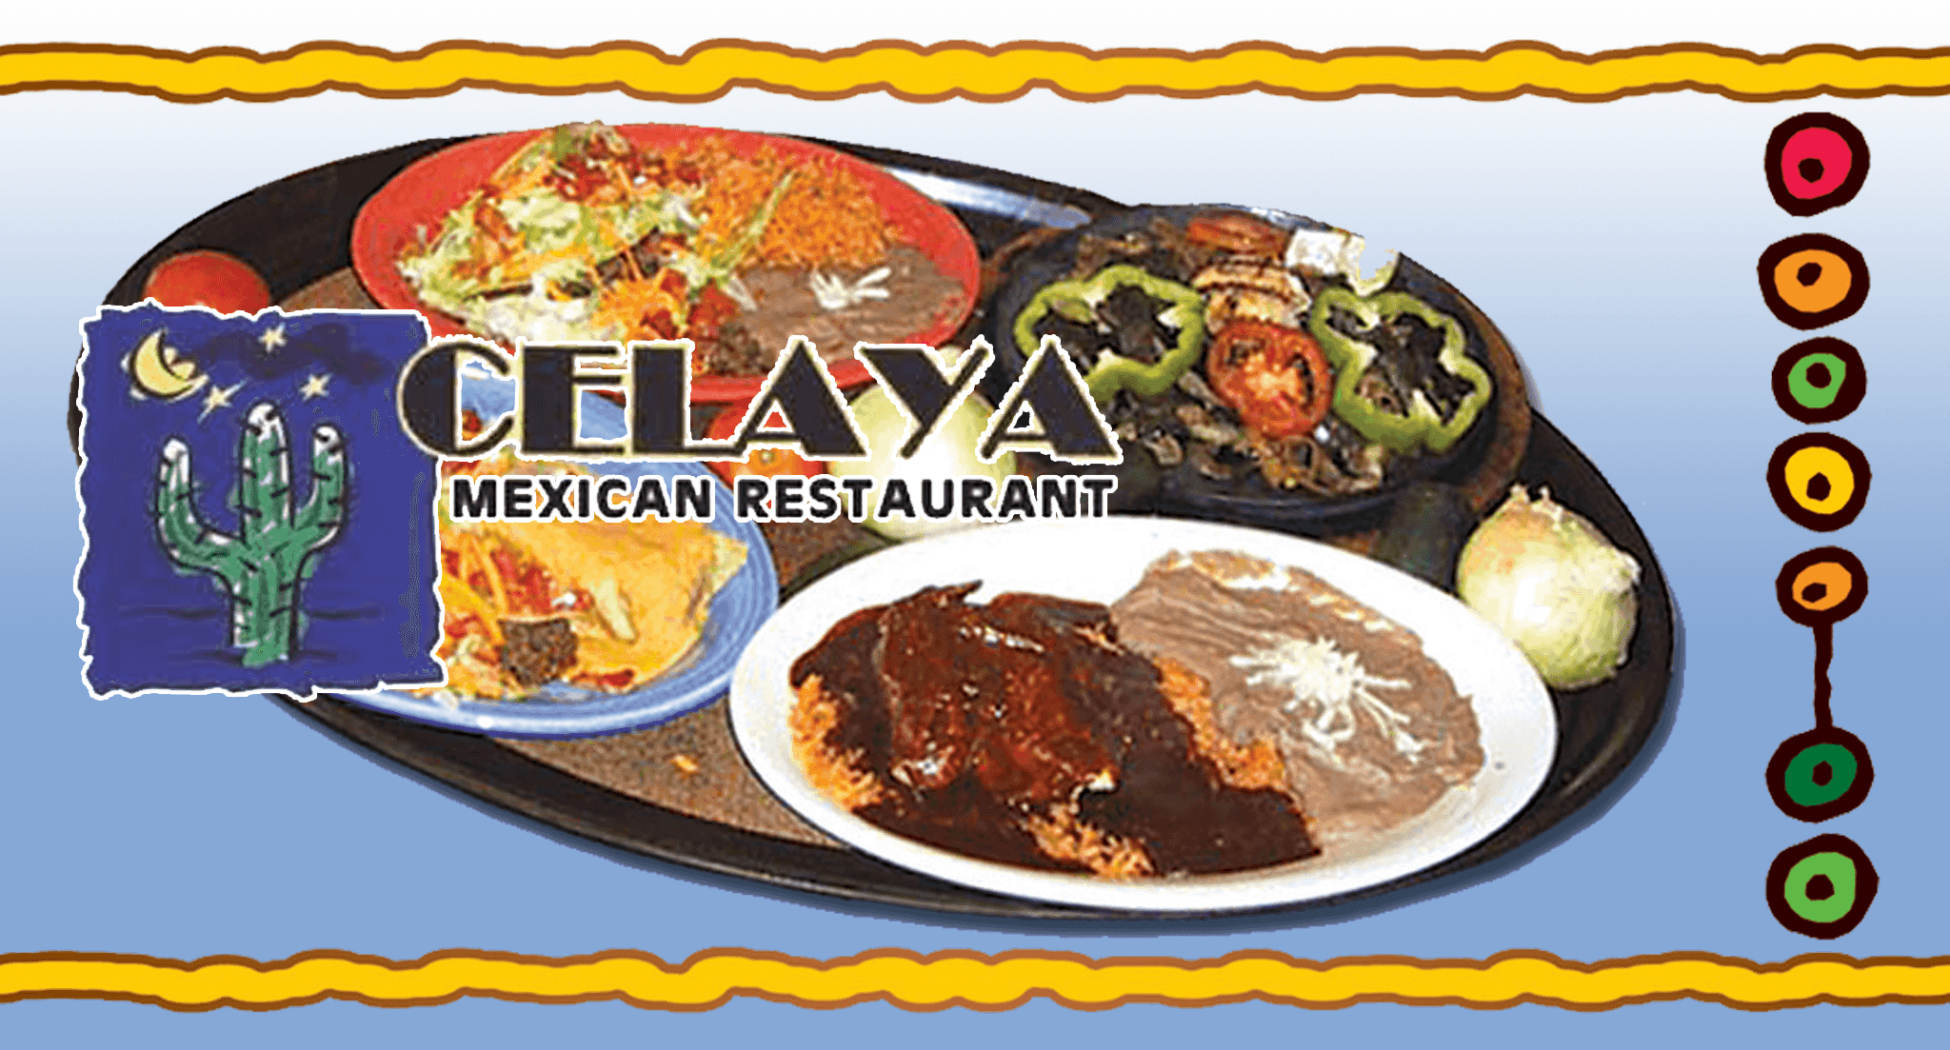 Celaya Mexican Restaurant